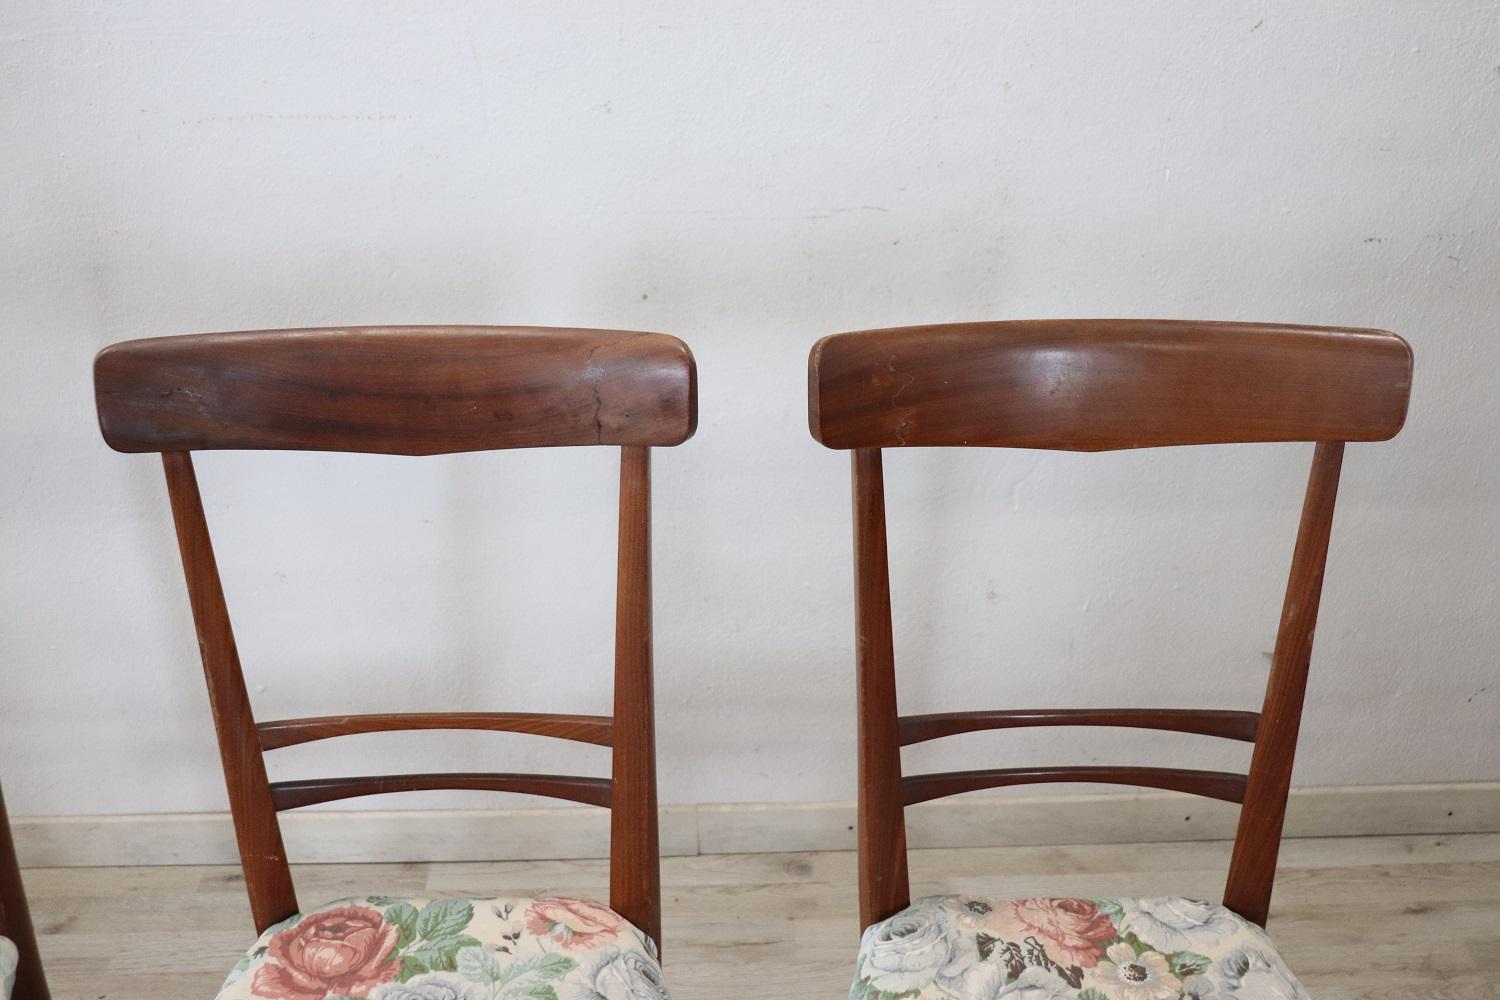 20th Century Italian Design Set of Four Chairs in Teak, Ico Parisi 1950s For Sale 1